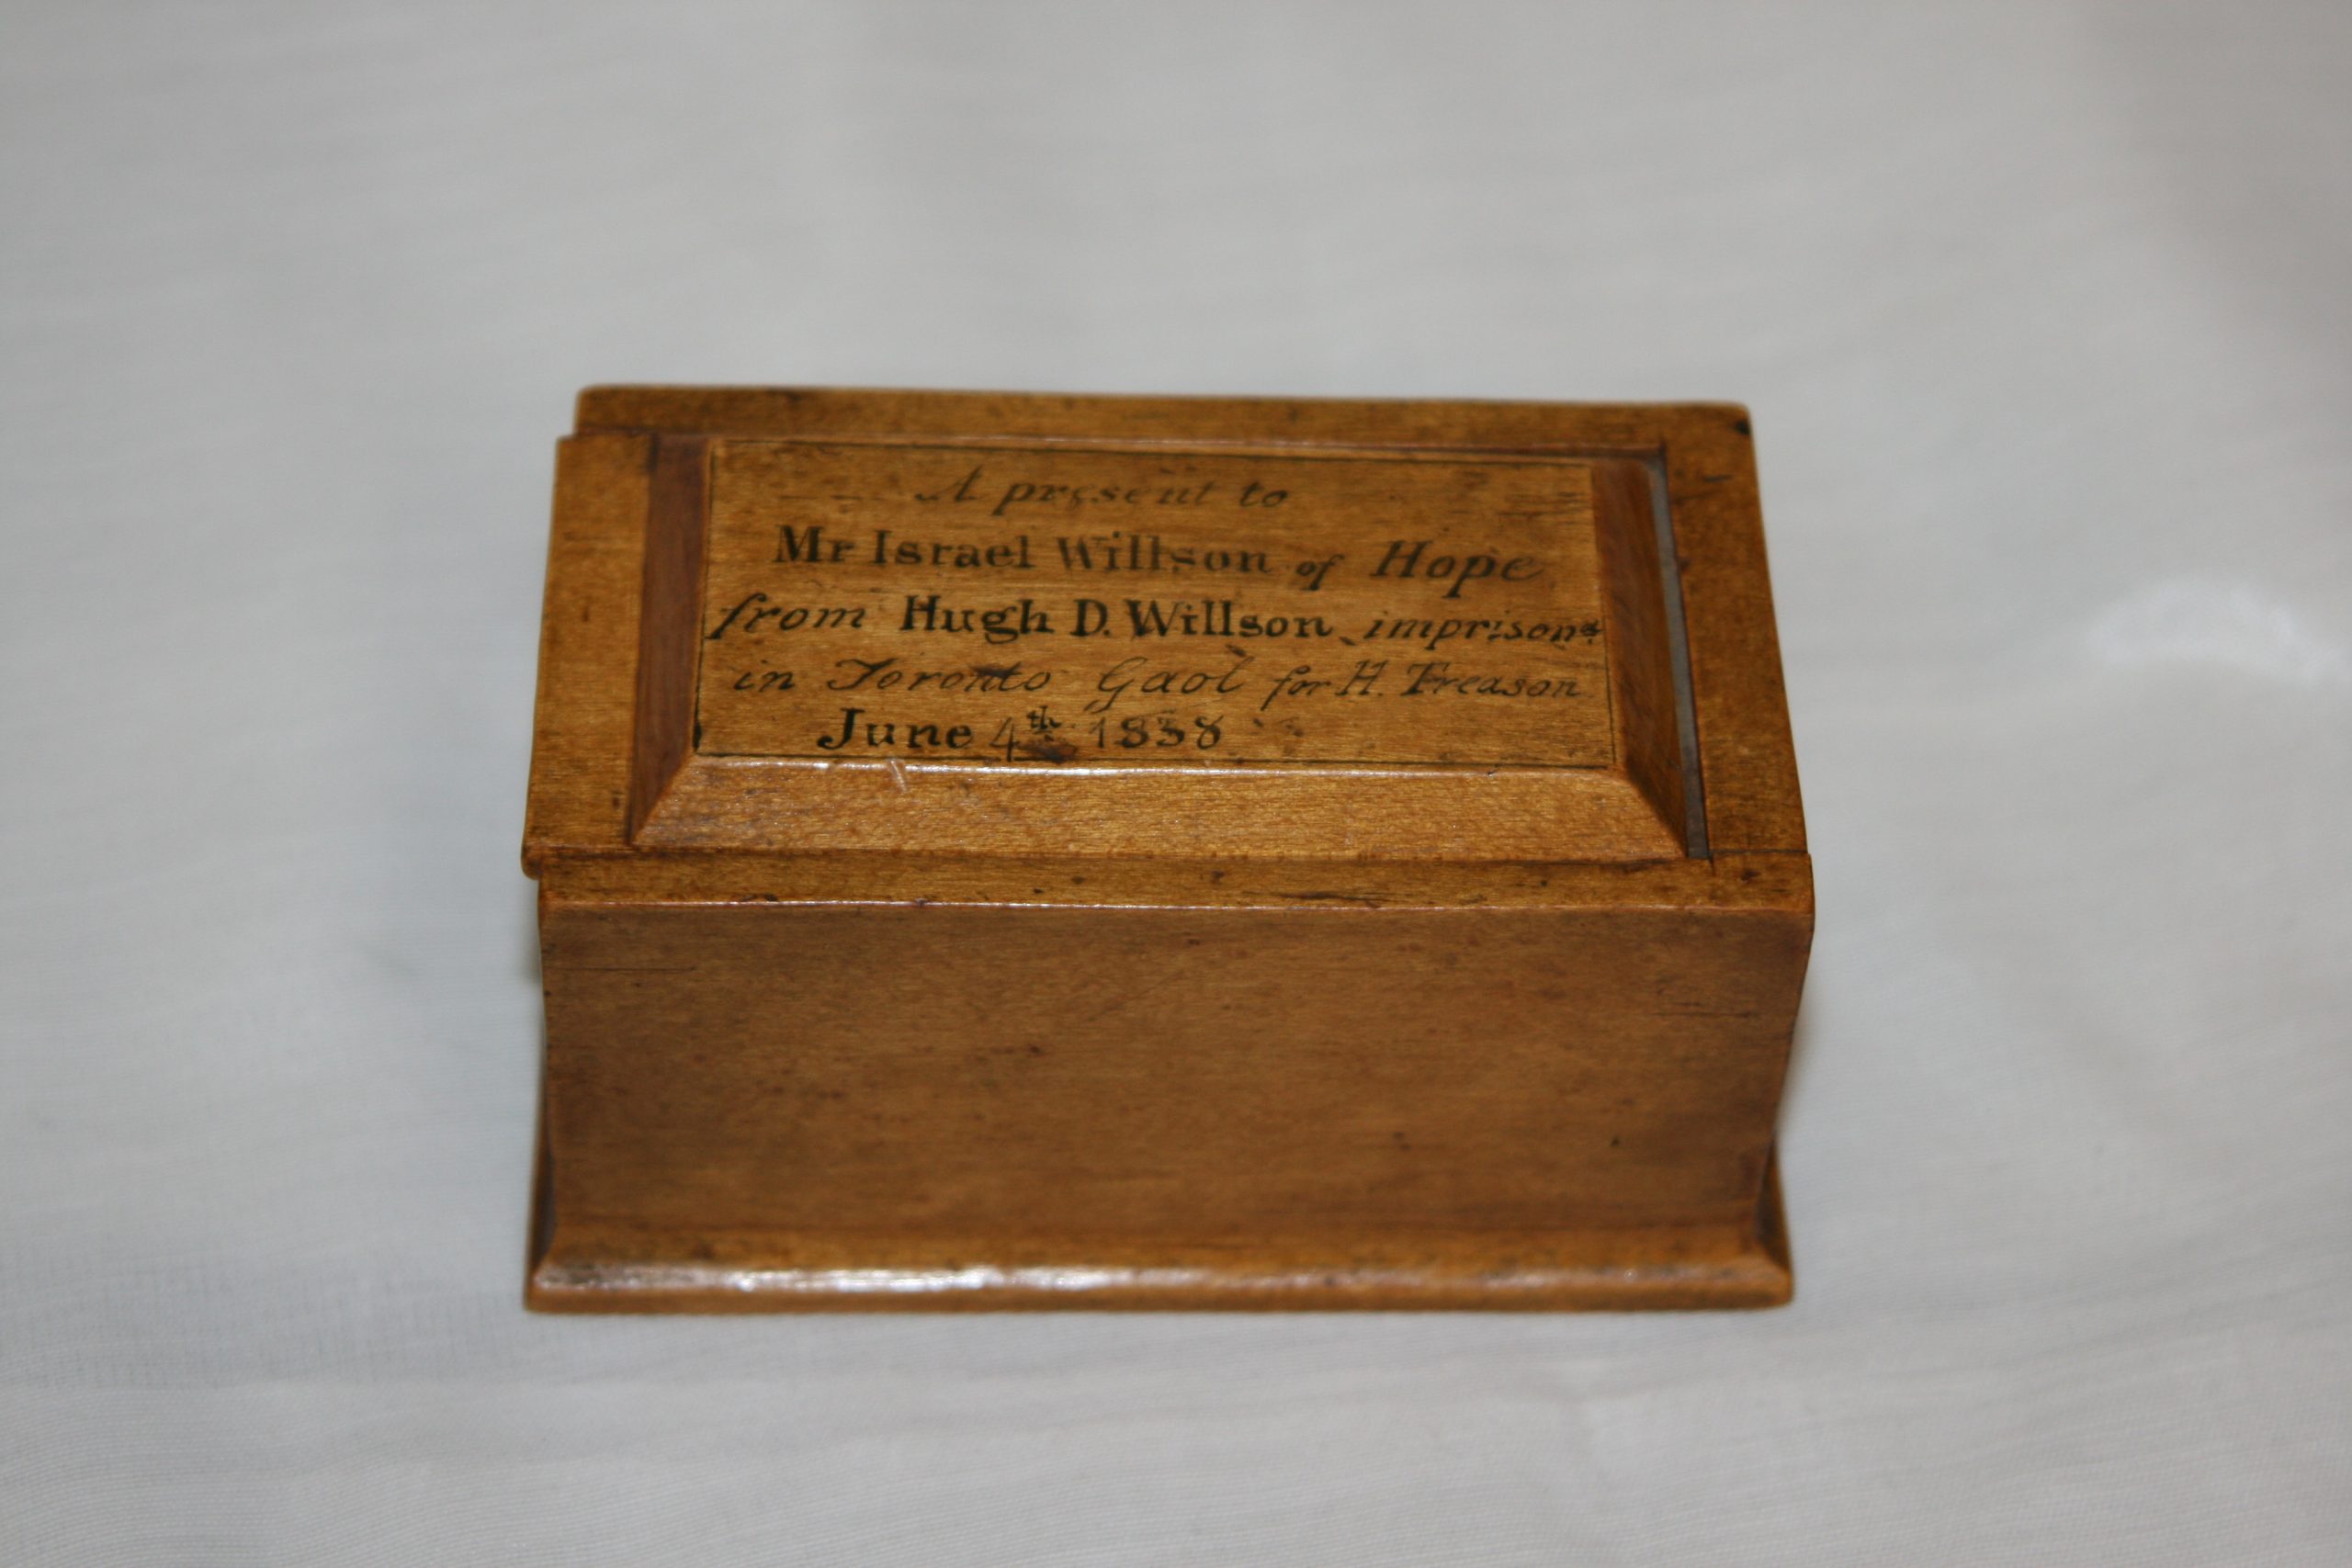 This rebellion box made of hard maple by Hugh D. Willson for Mr. Israel Willson of Hope.